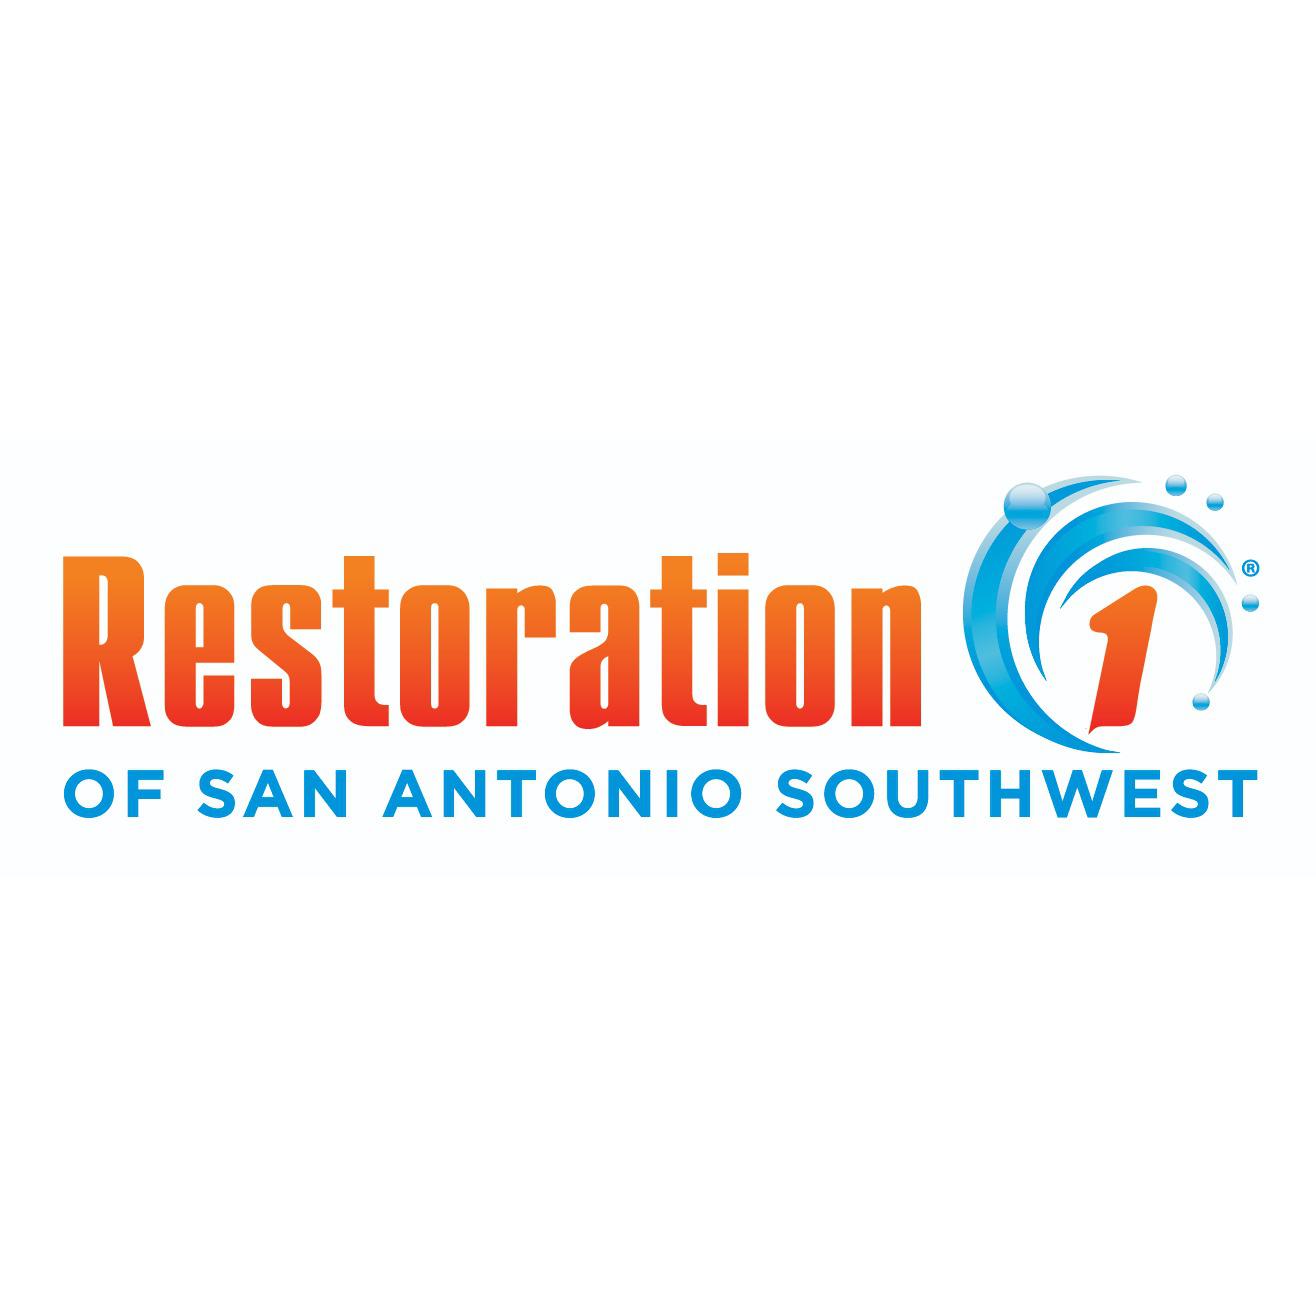 Restoration 1 of San Antonio Southwest